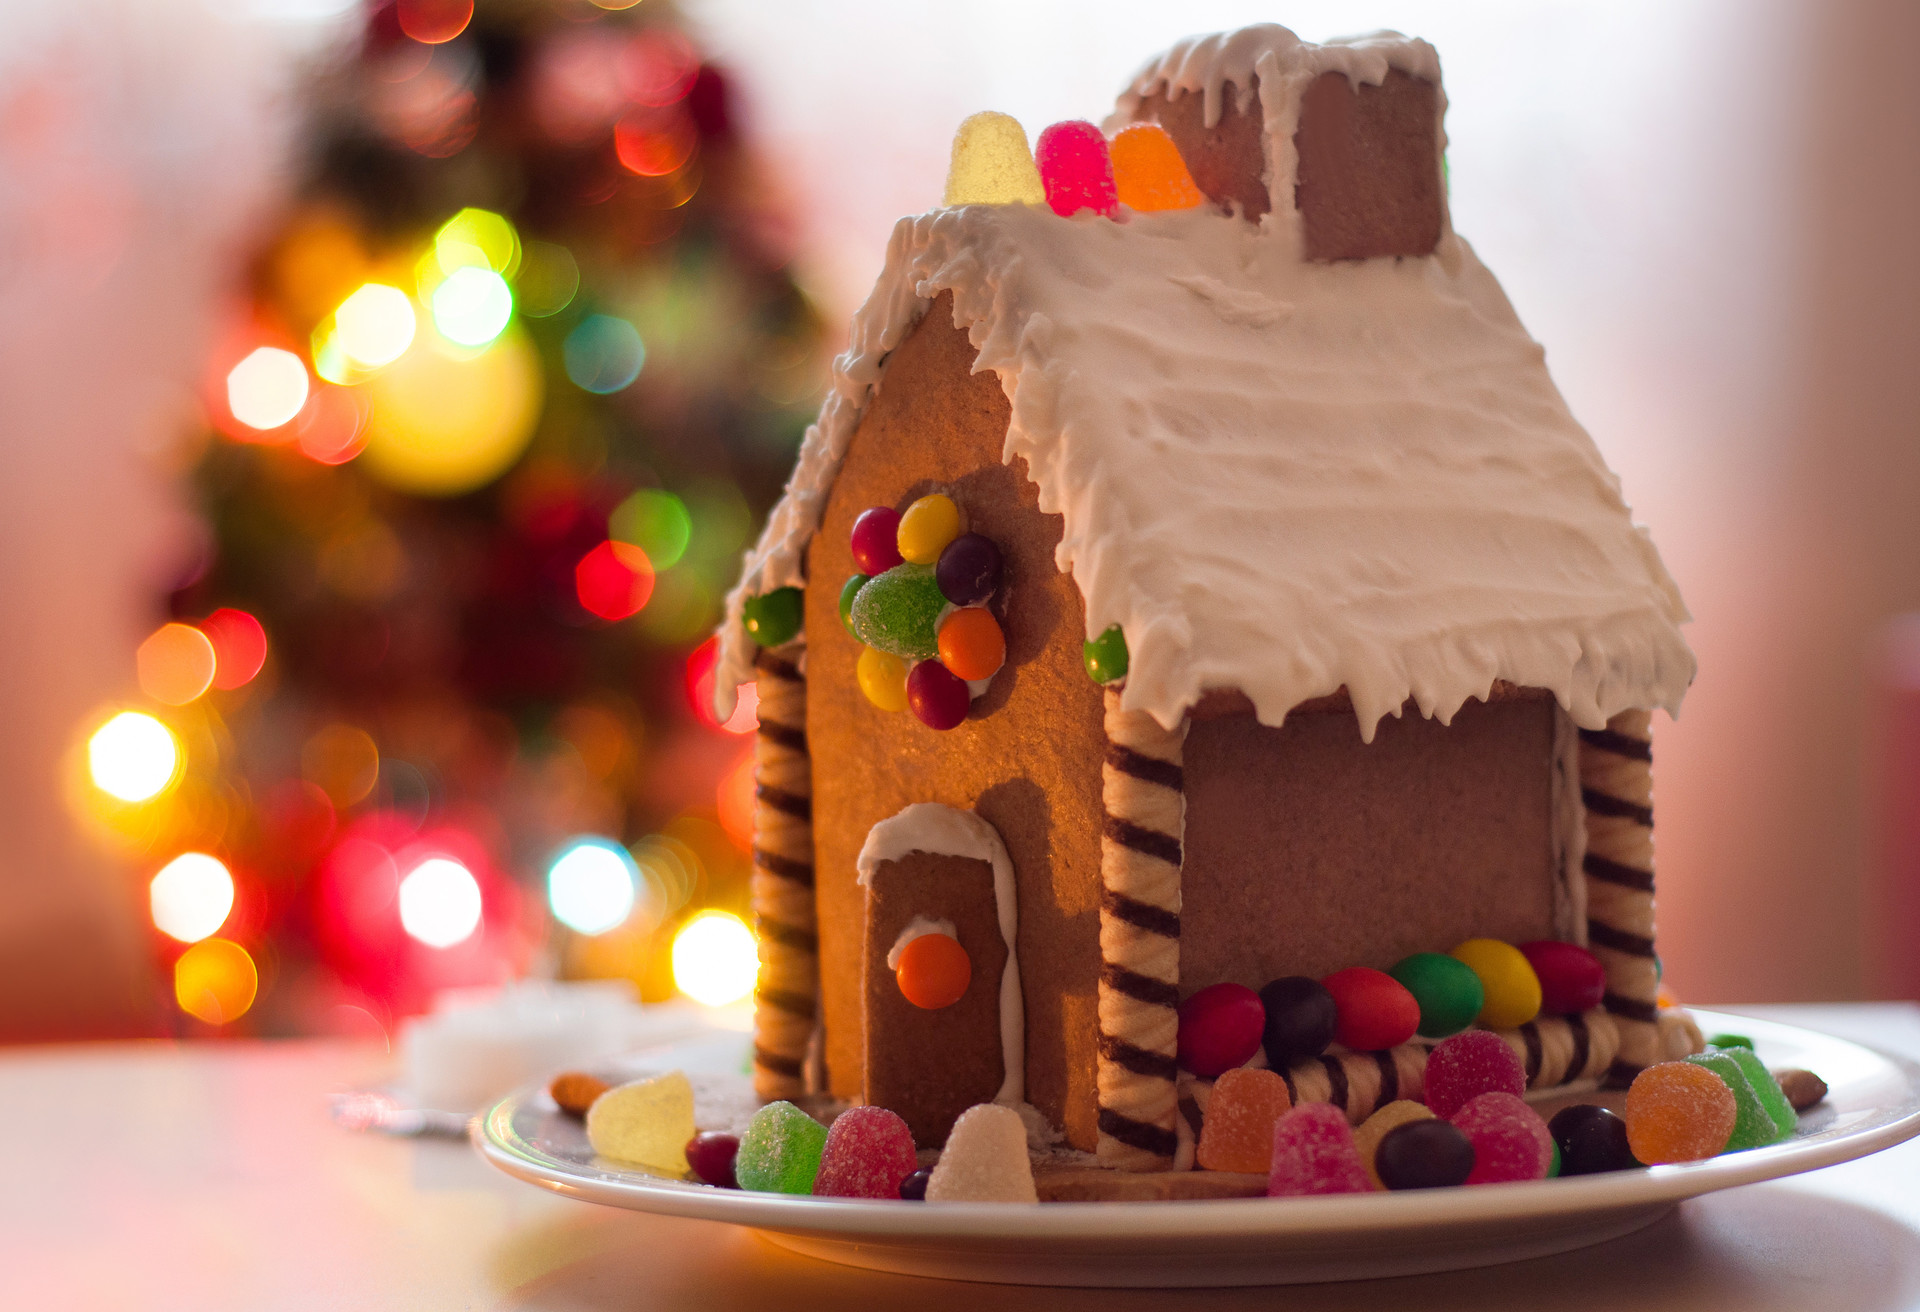 Gingerbread house Christmas lights background; Shutterstock ID 231732376; Purpose: Virtual Christmas Guides; Brand (KAYAK, Momondo, Any): Kayak; Client/Licensee: KAYAK